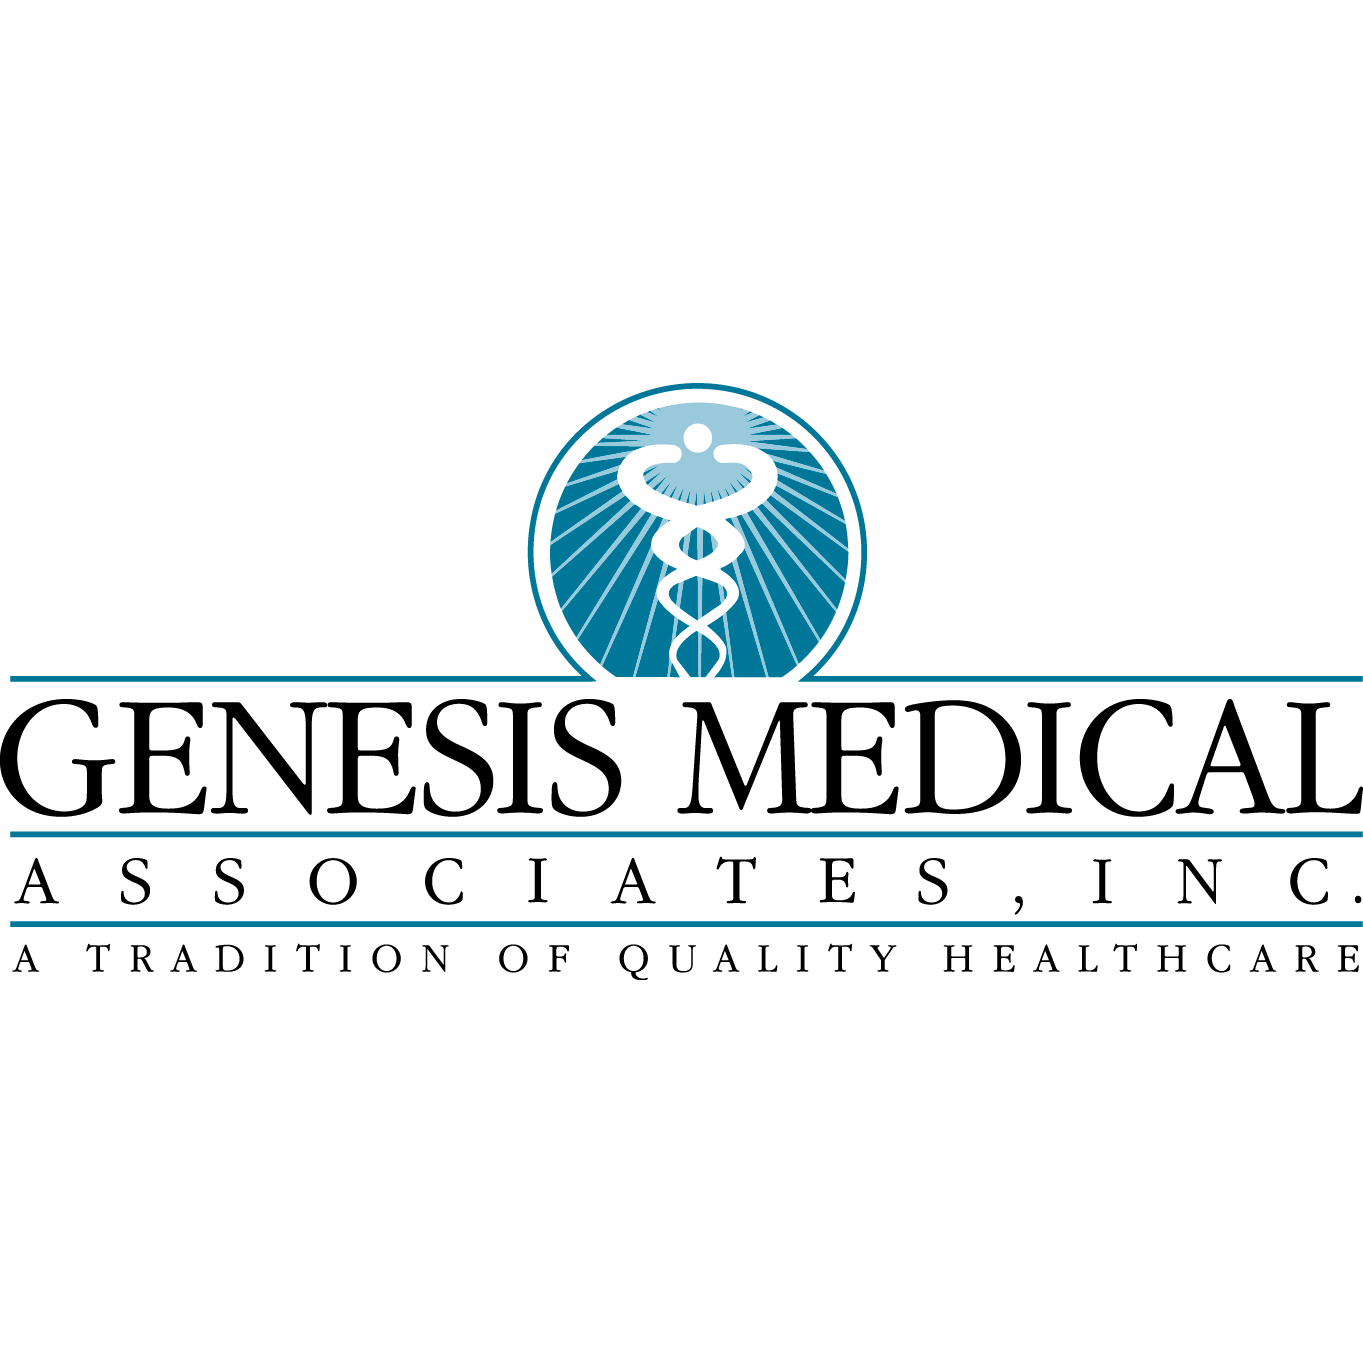 Genesis Medical Associates: Grob, Scheri, Woodburn, and Griffin - Wexford Logo